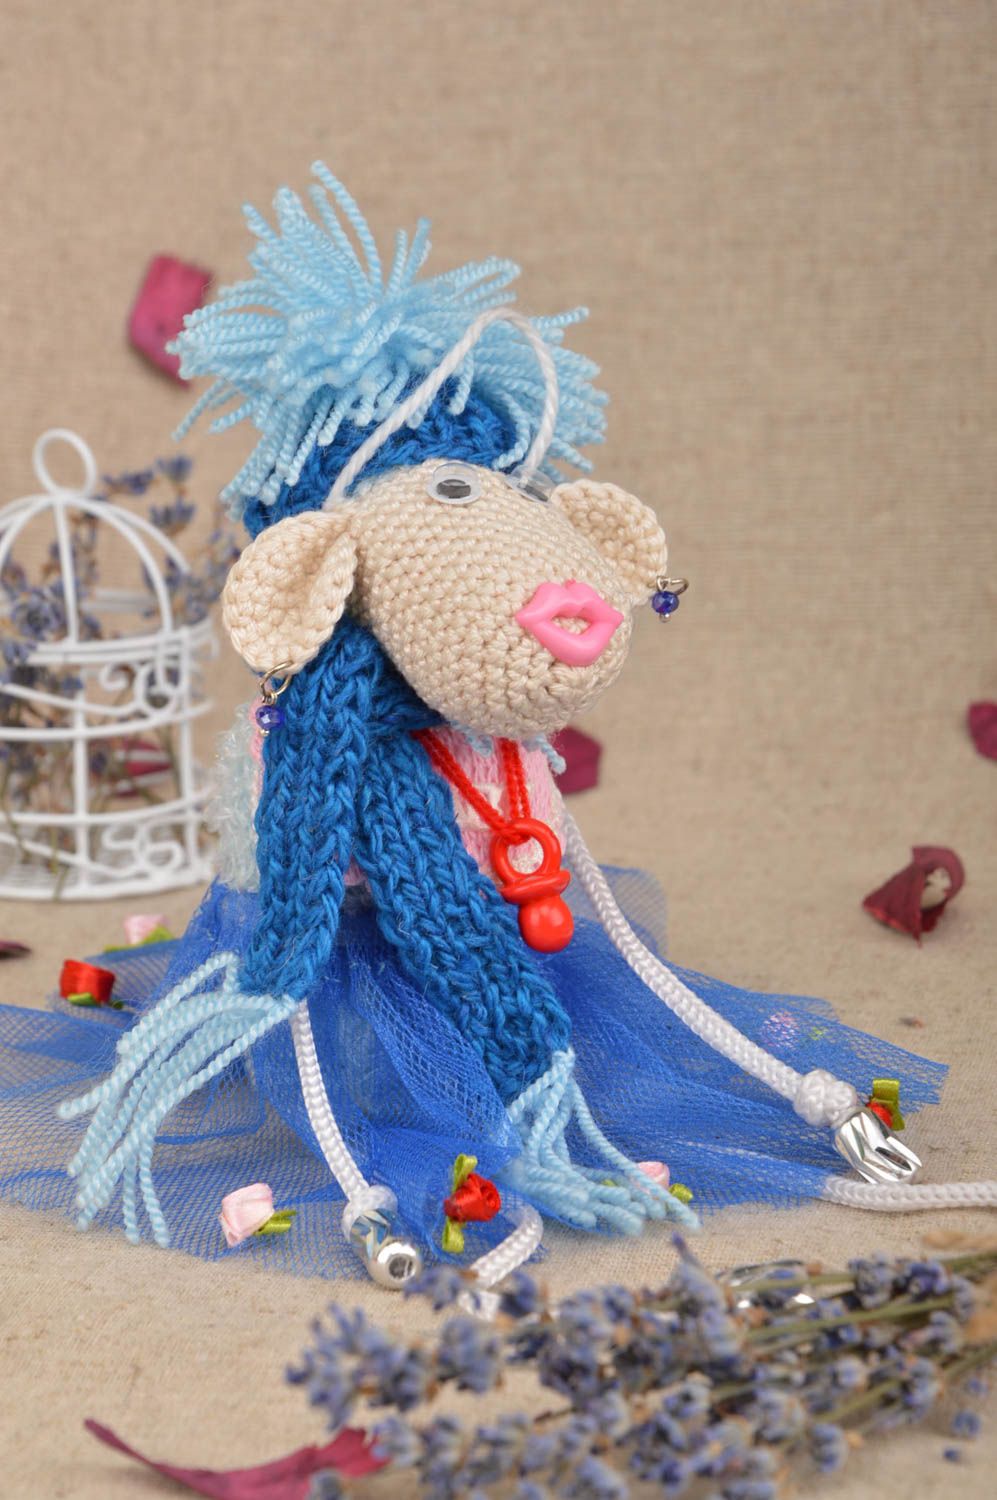 Handmade soft toy crochet toys nursery decor gifts for children stuffed animals photo 1